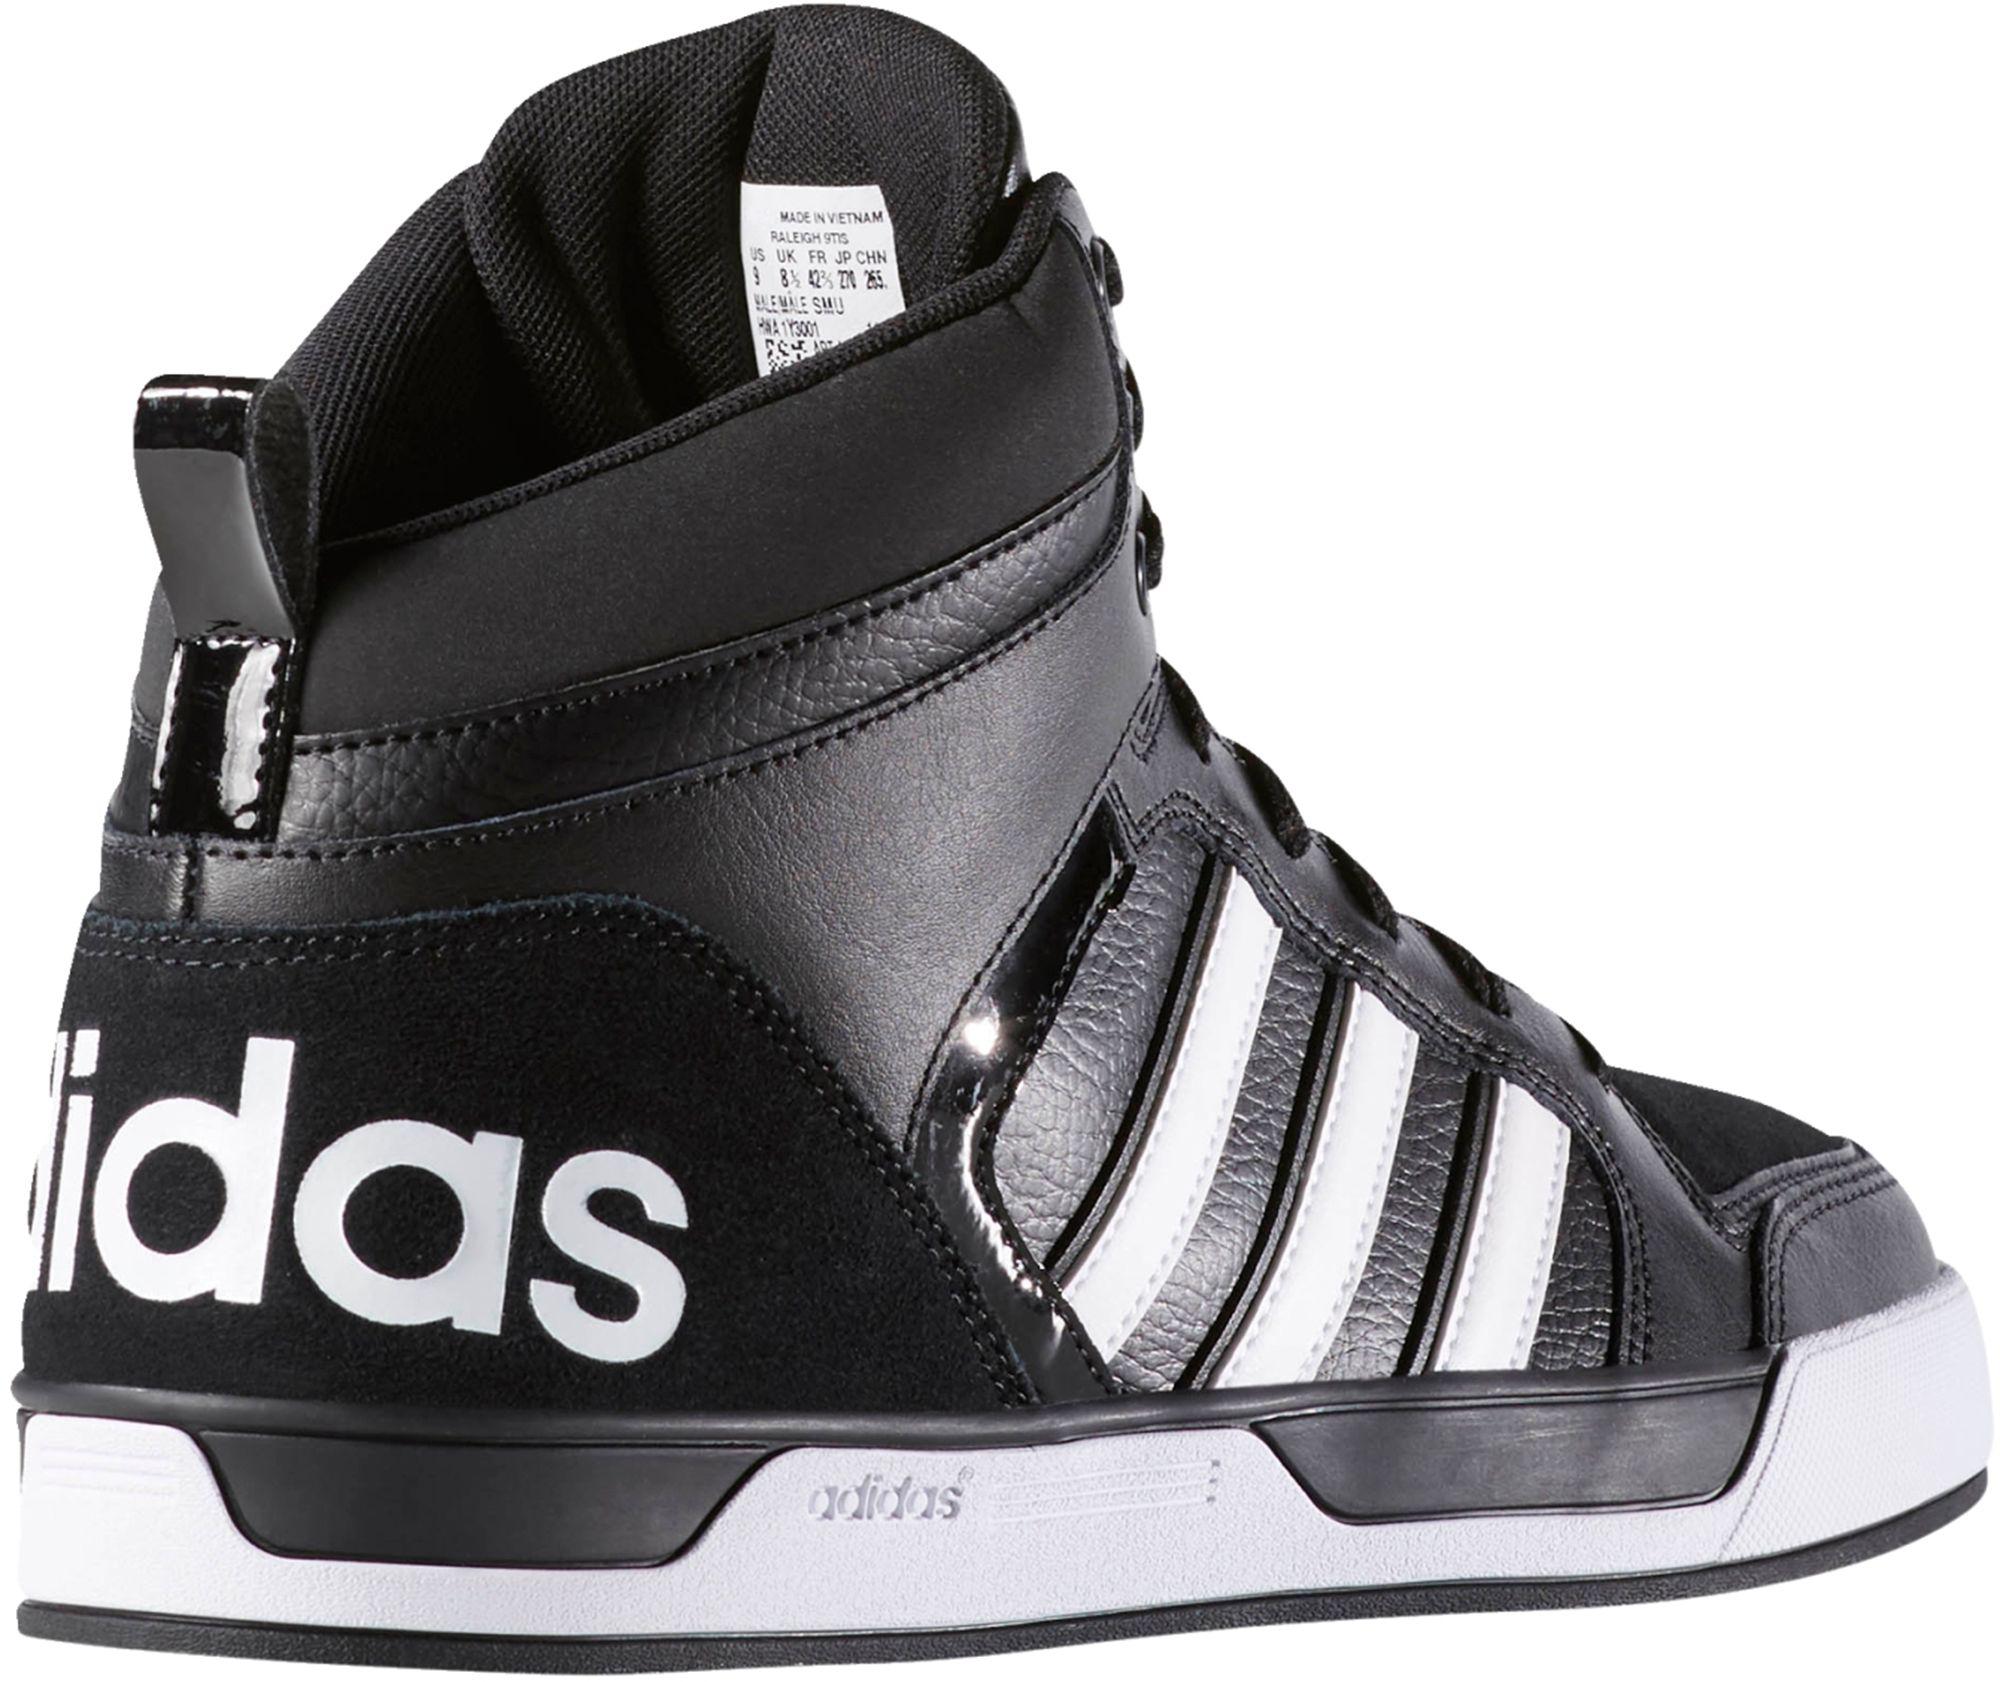 adidas neo raleigh 9tis mid black sneakers